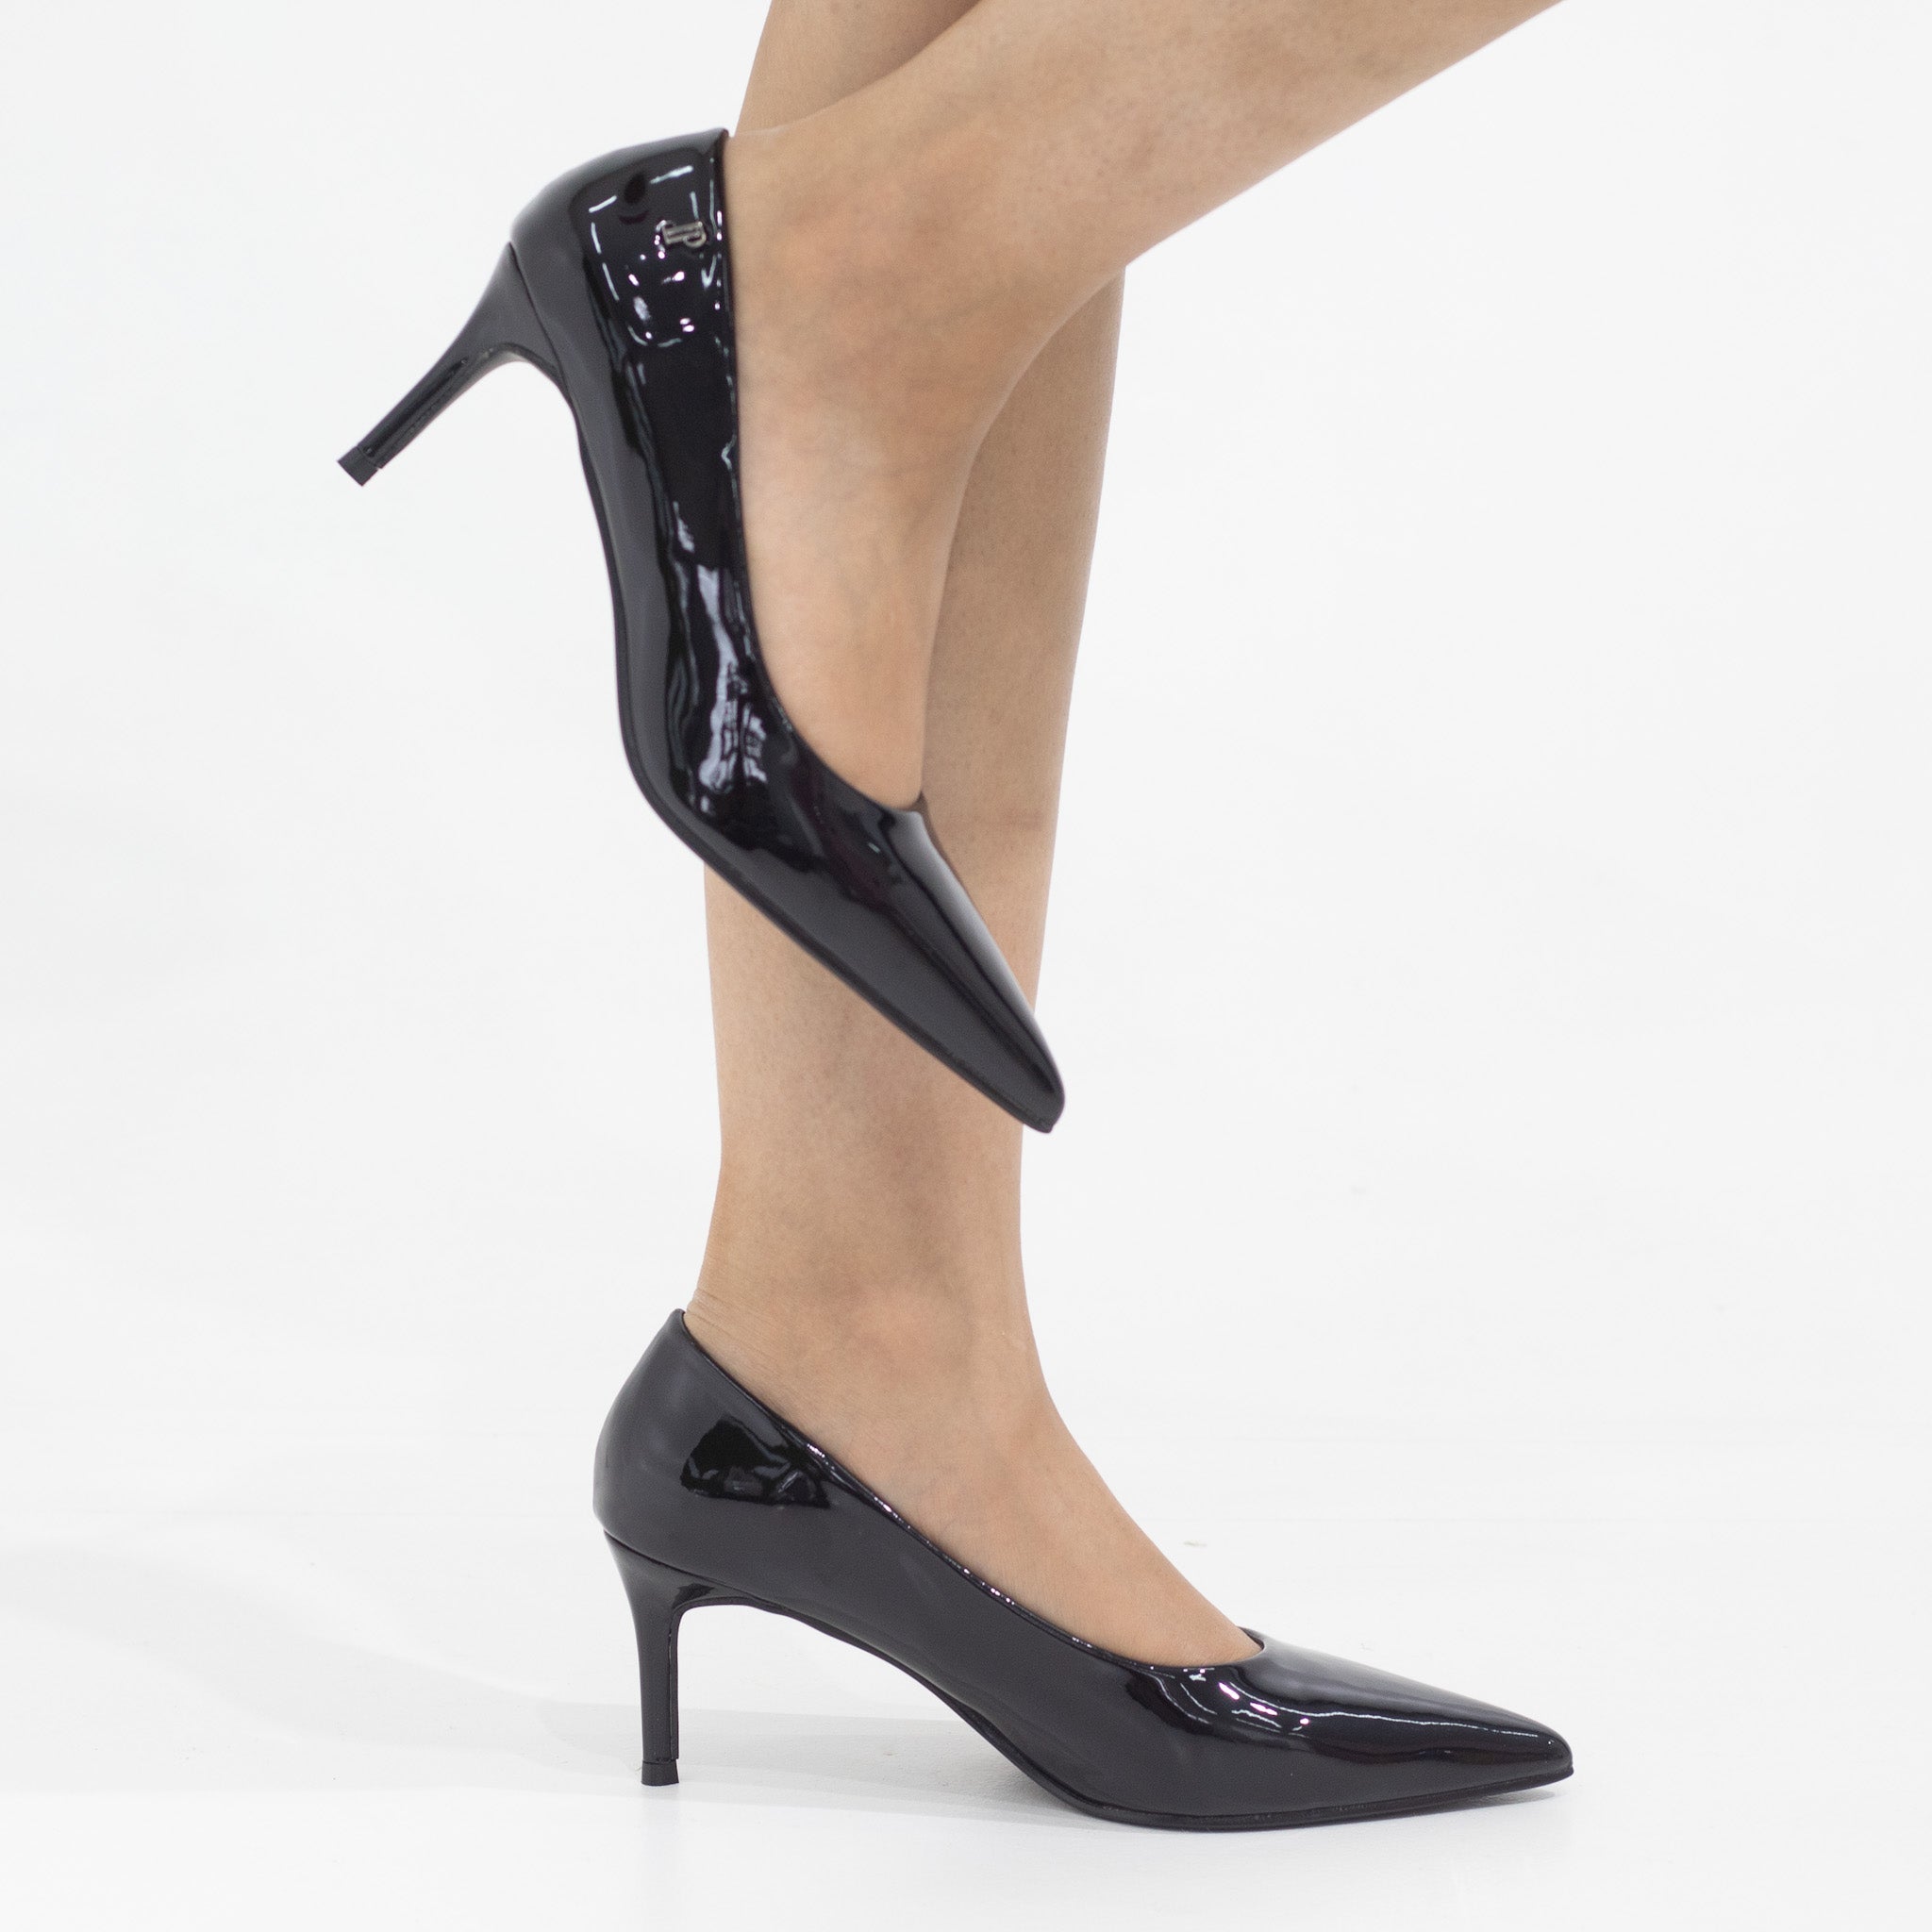 Bavisha 7cm heel pointy pat court black